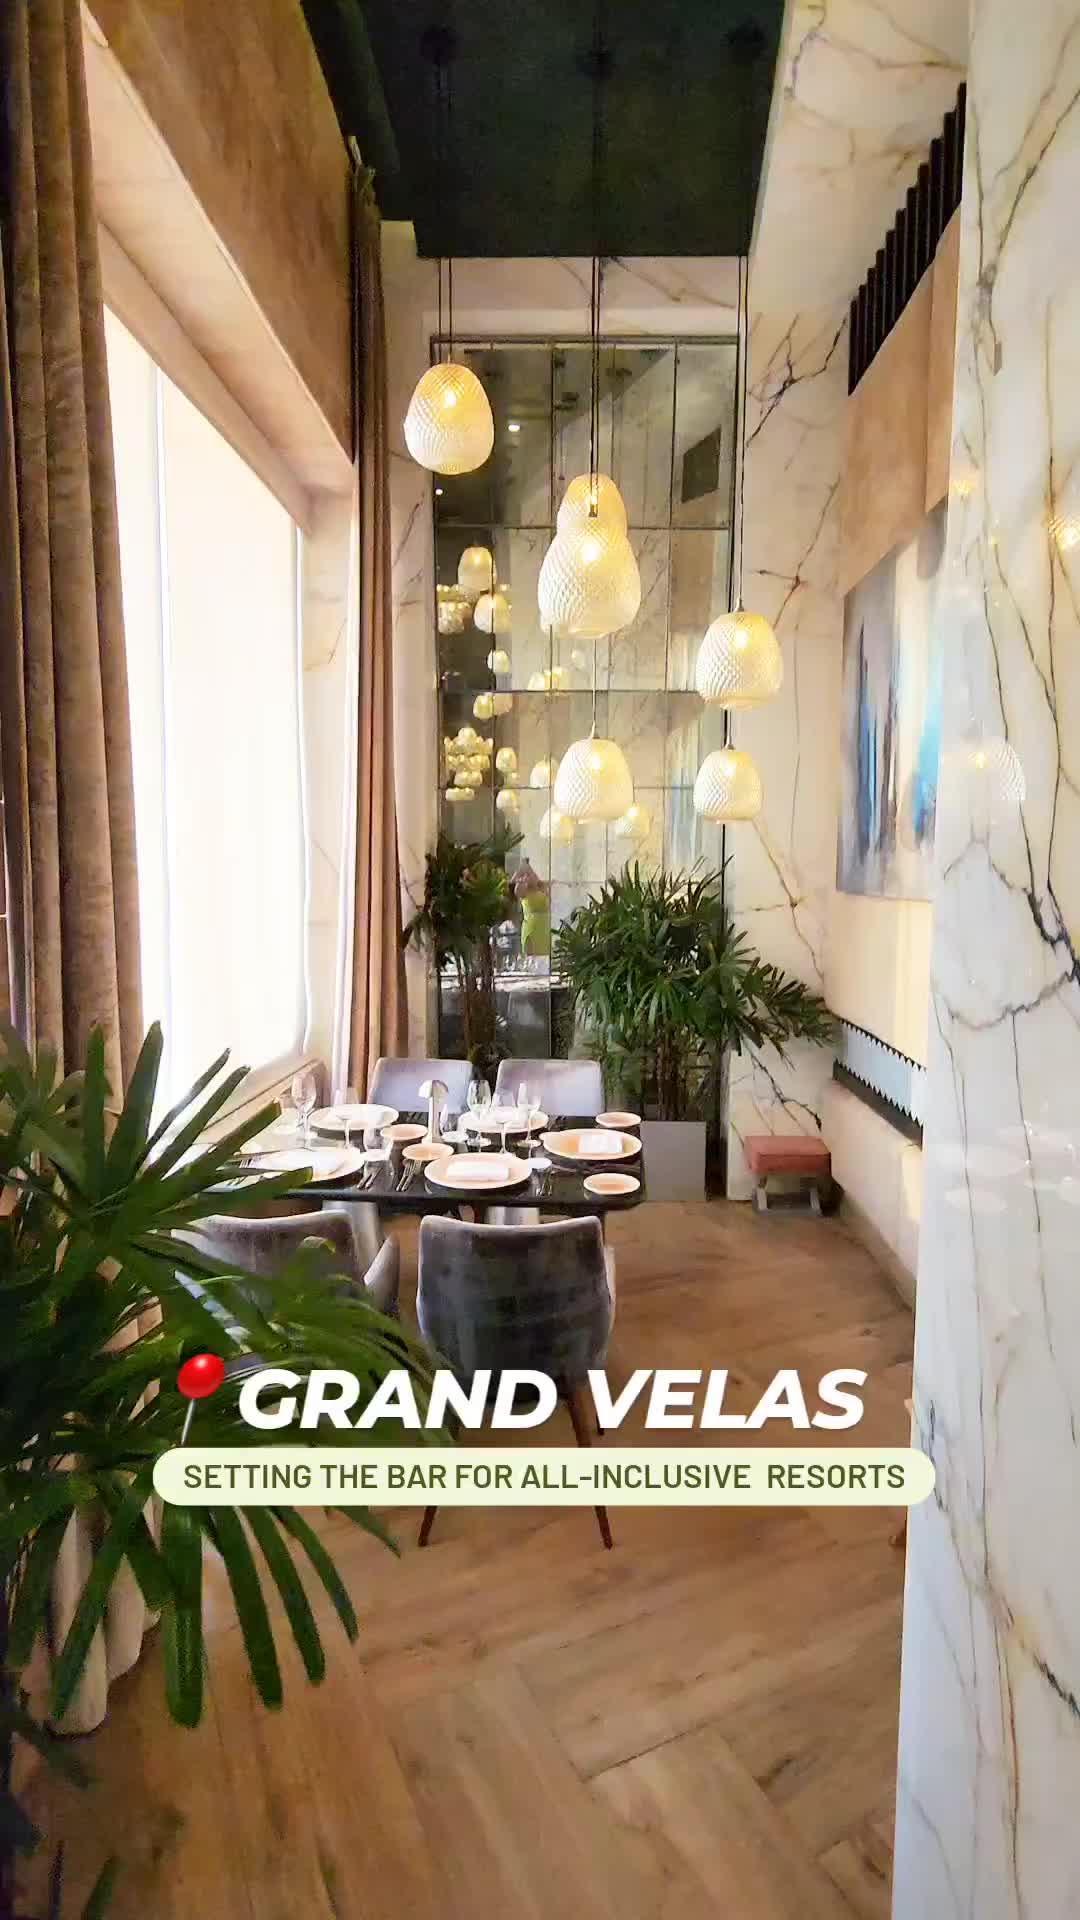 All-Inclusive Luxury at Grand Velas Riviera Nayarit